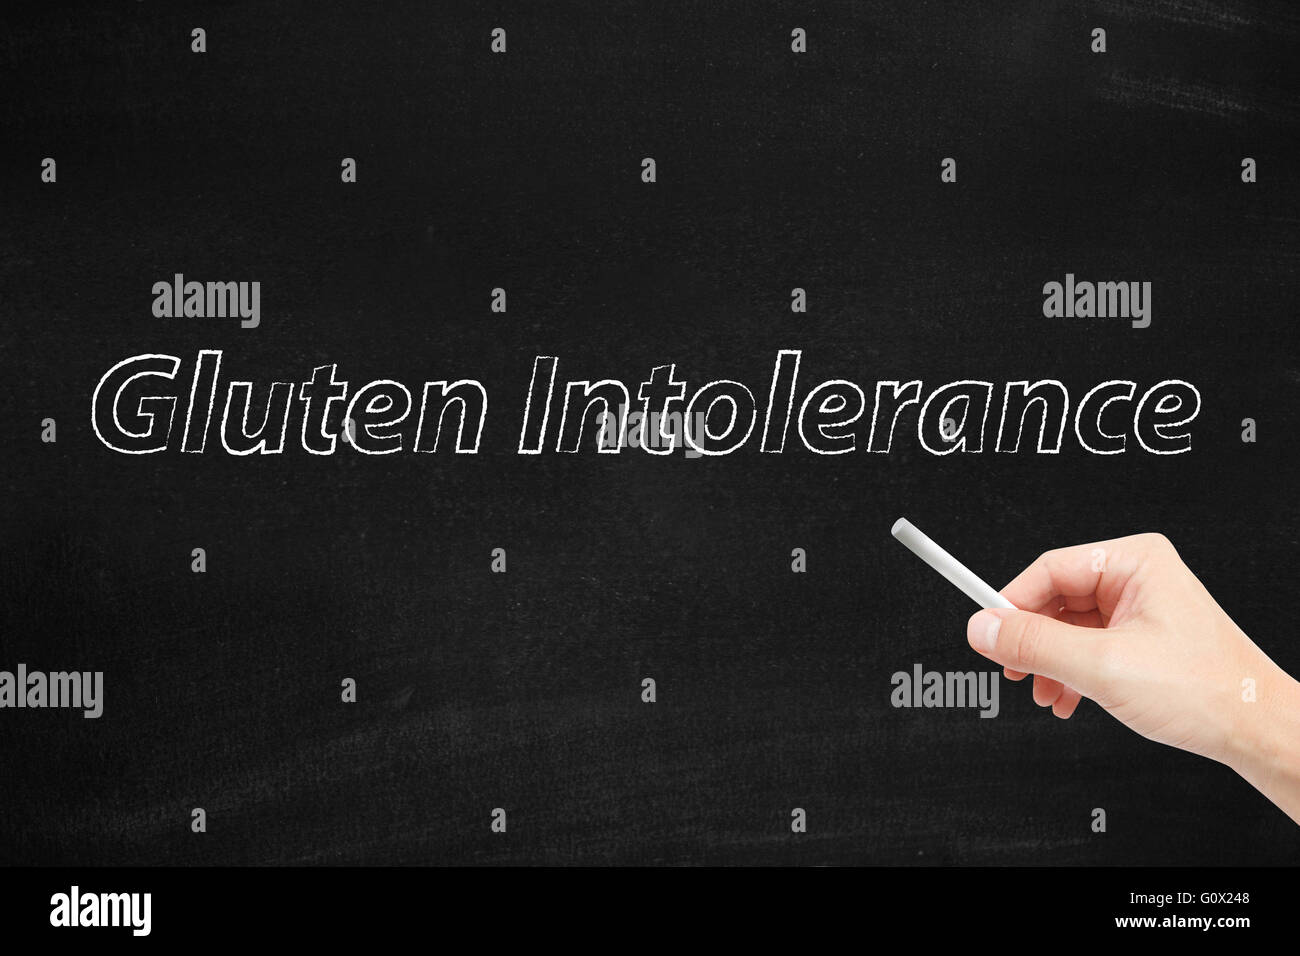 Gluten Intolerance written on a blackboard Stock Photo